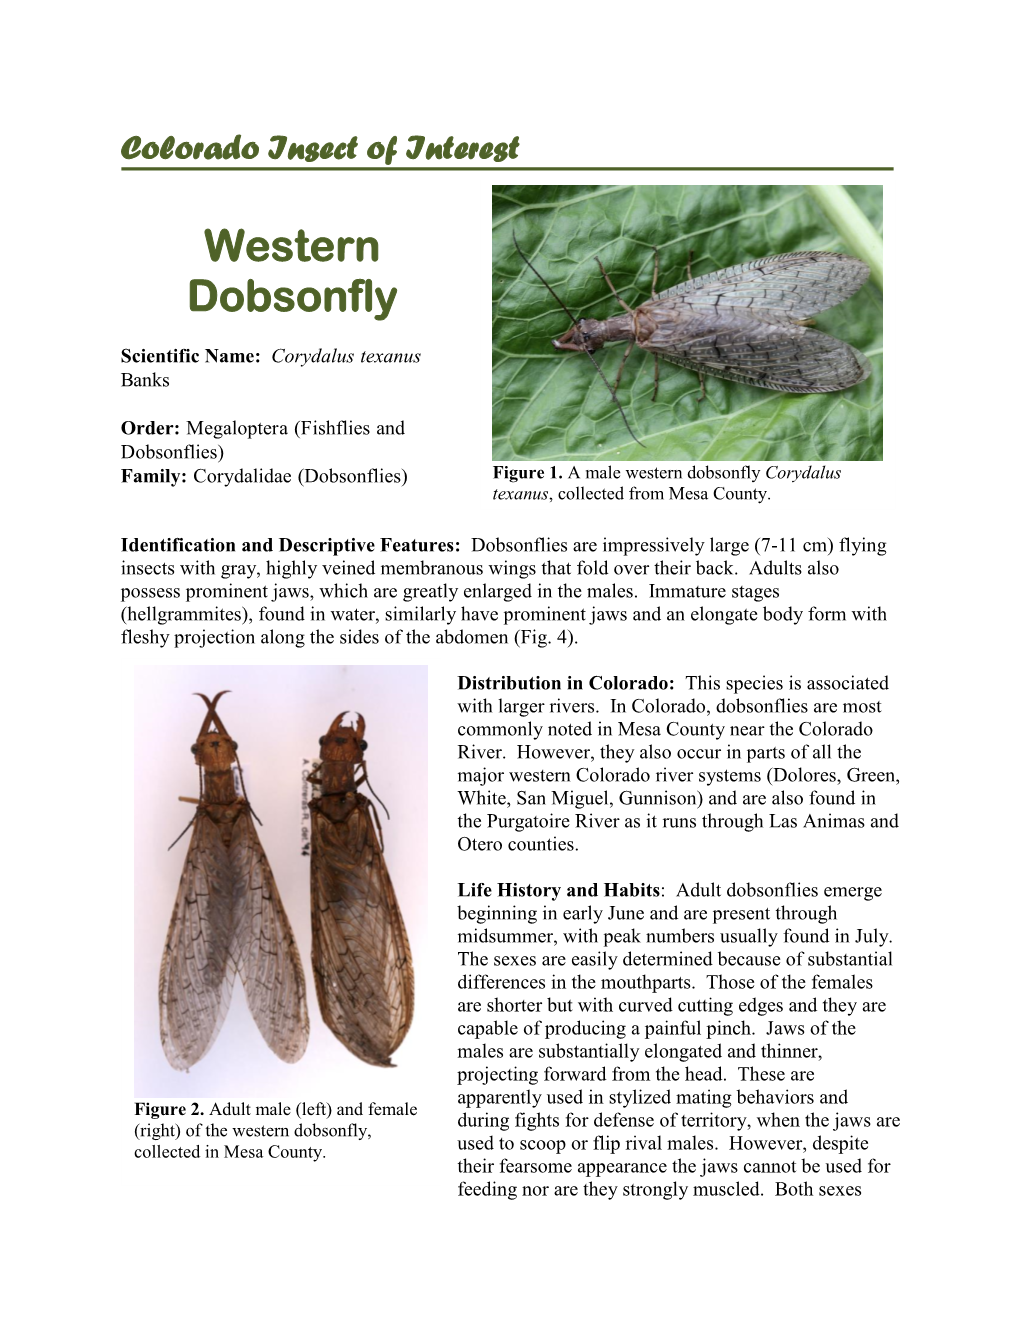 Western Dobsonfly